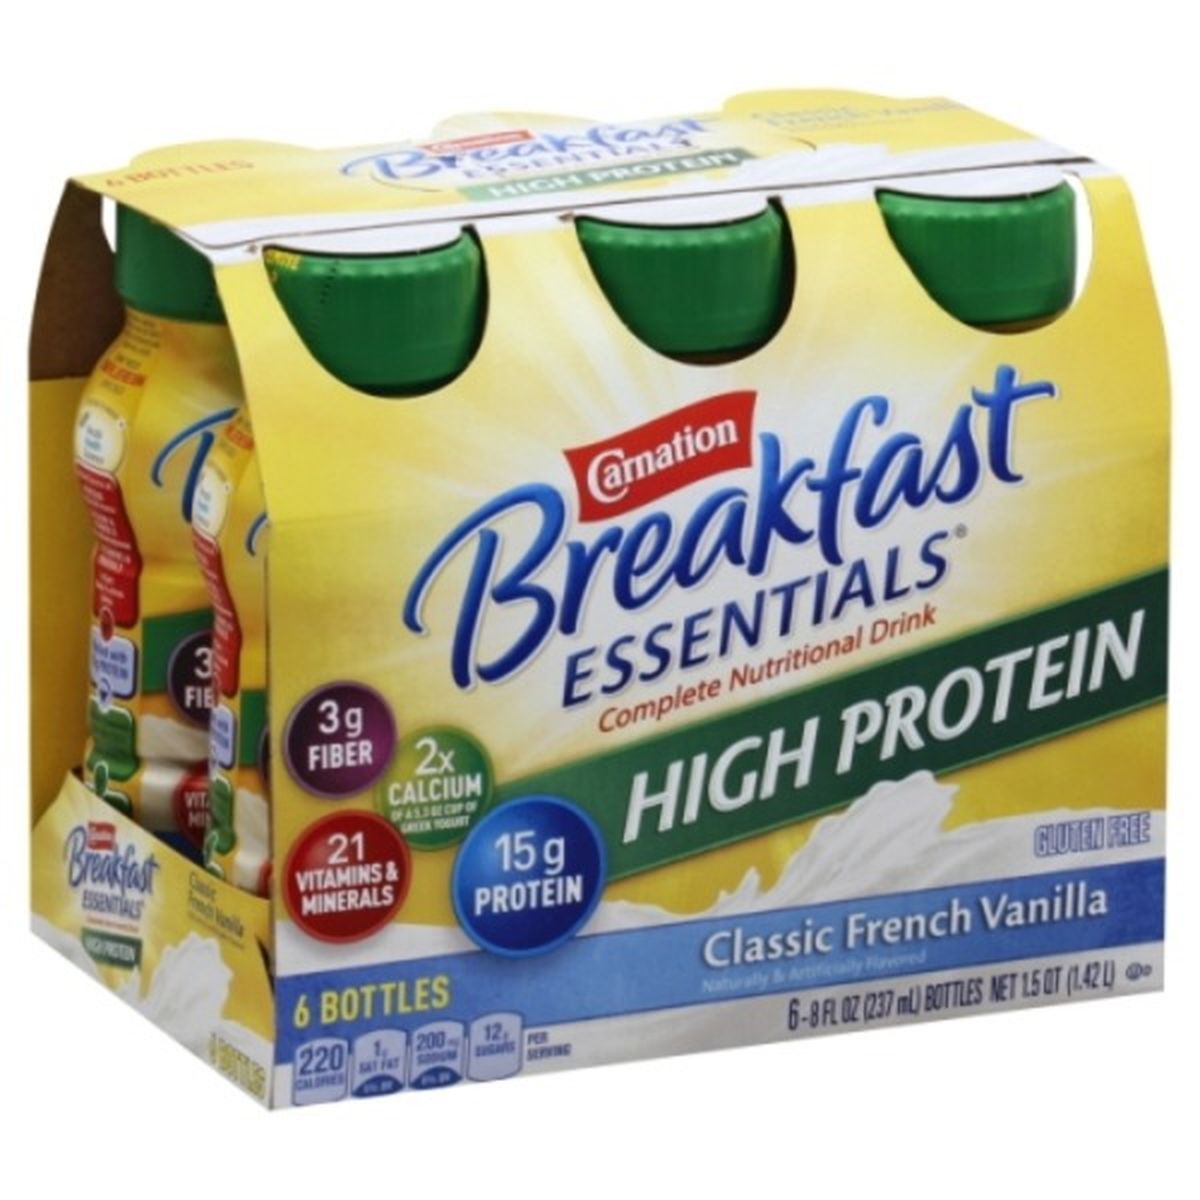 Calories in Carnation Breakfast Essentials Breakfast Essentials Complete Nutritional Drink, High Protein, Classic French Vanilla